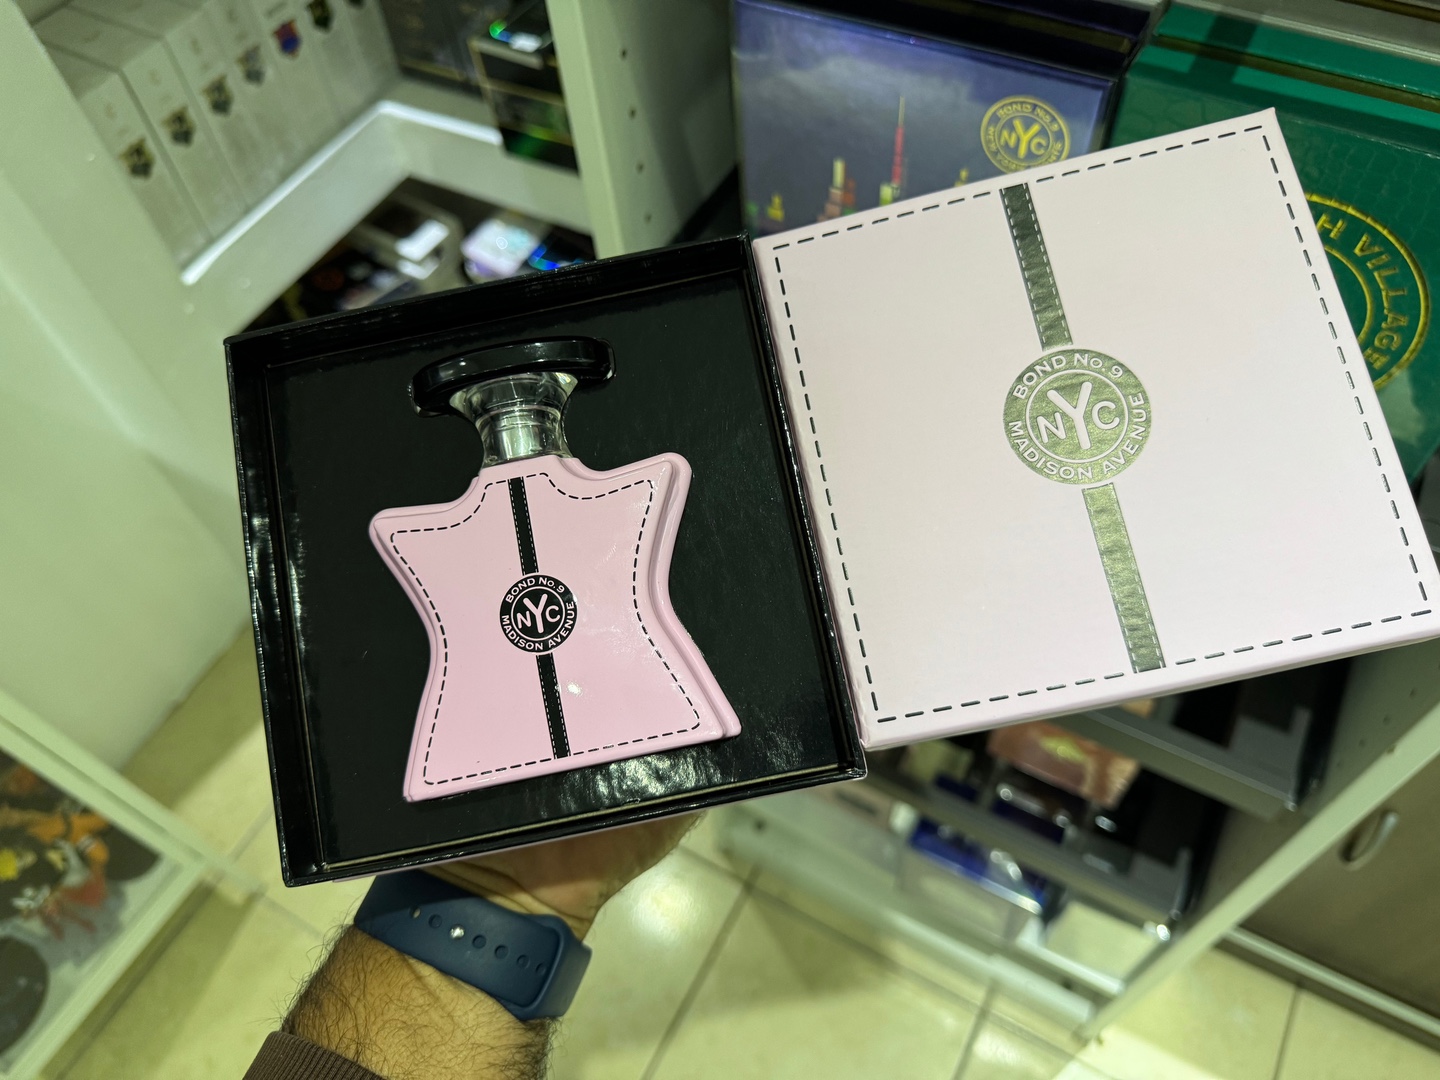 joyas, relojes y accesorios - Perfume Bond No. 9 NYC Madisson Avenue 50ml, 100% Original Nuevos RD$ 11,500 NEG 1